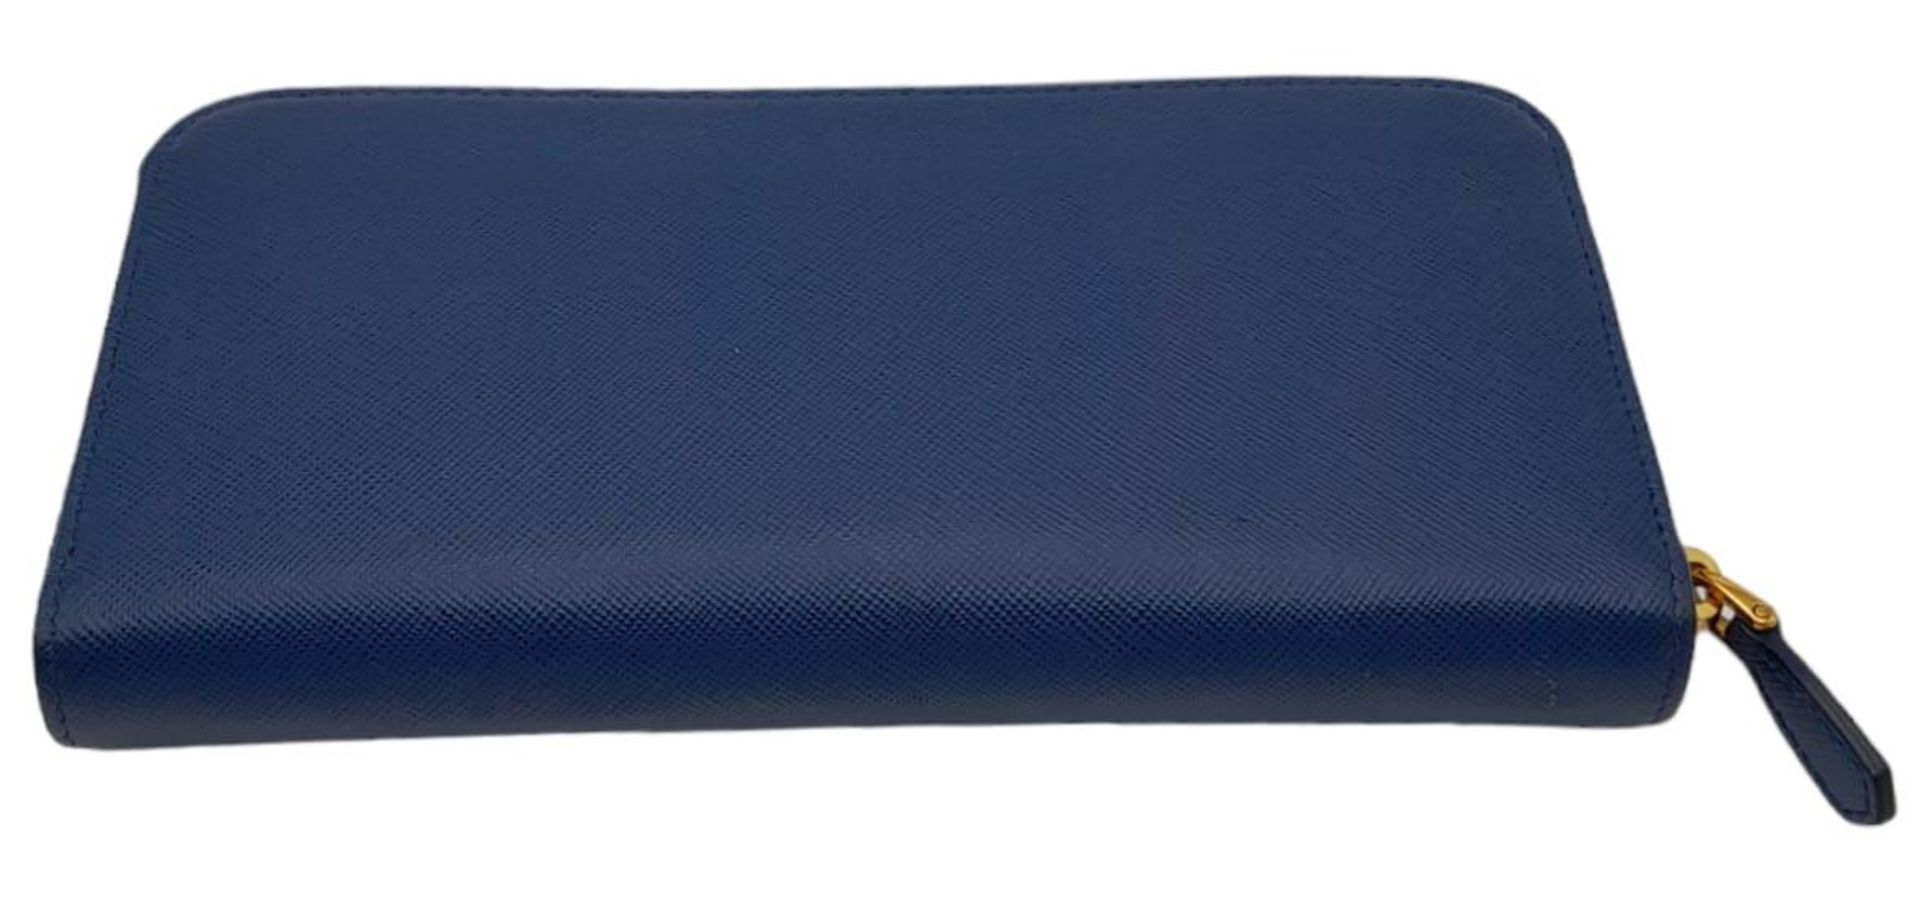 A Prada Royal Blue Purse/Wallet. Saffiano leather exterior, with the Prada logo in gold-toned - Bild 2 aus 7